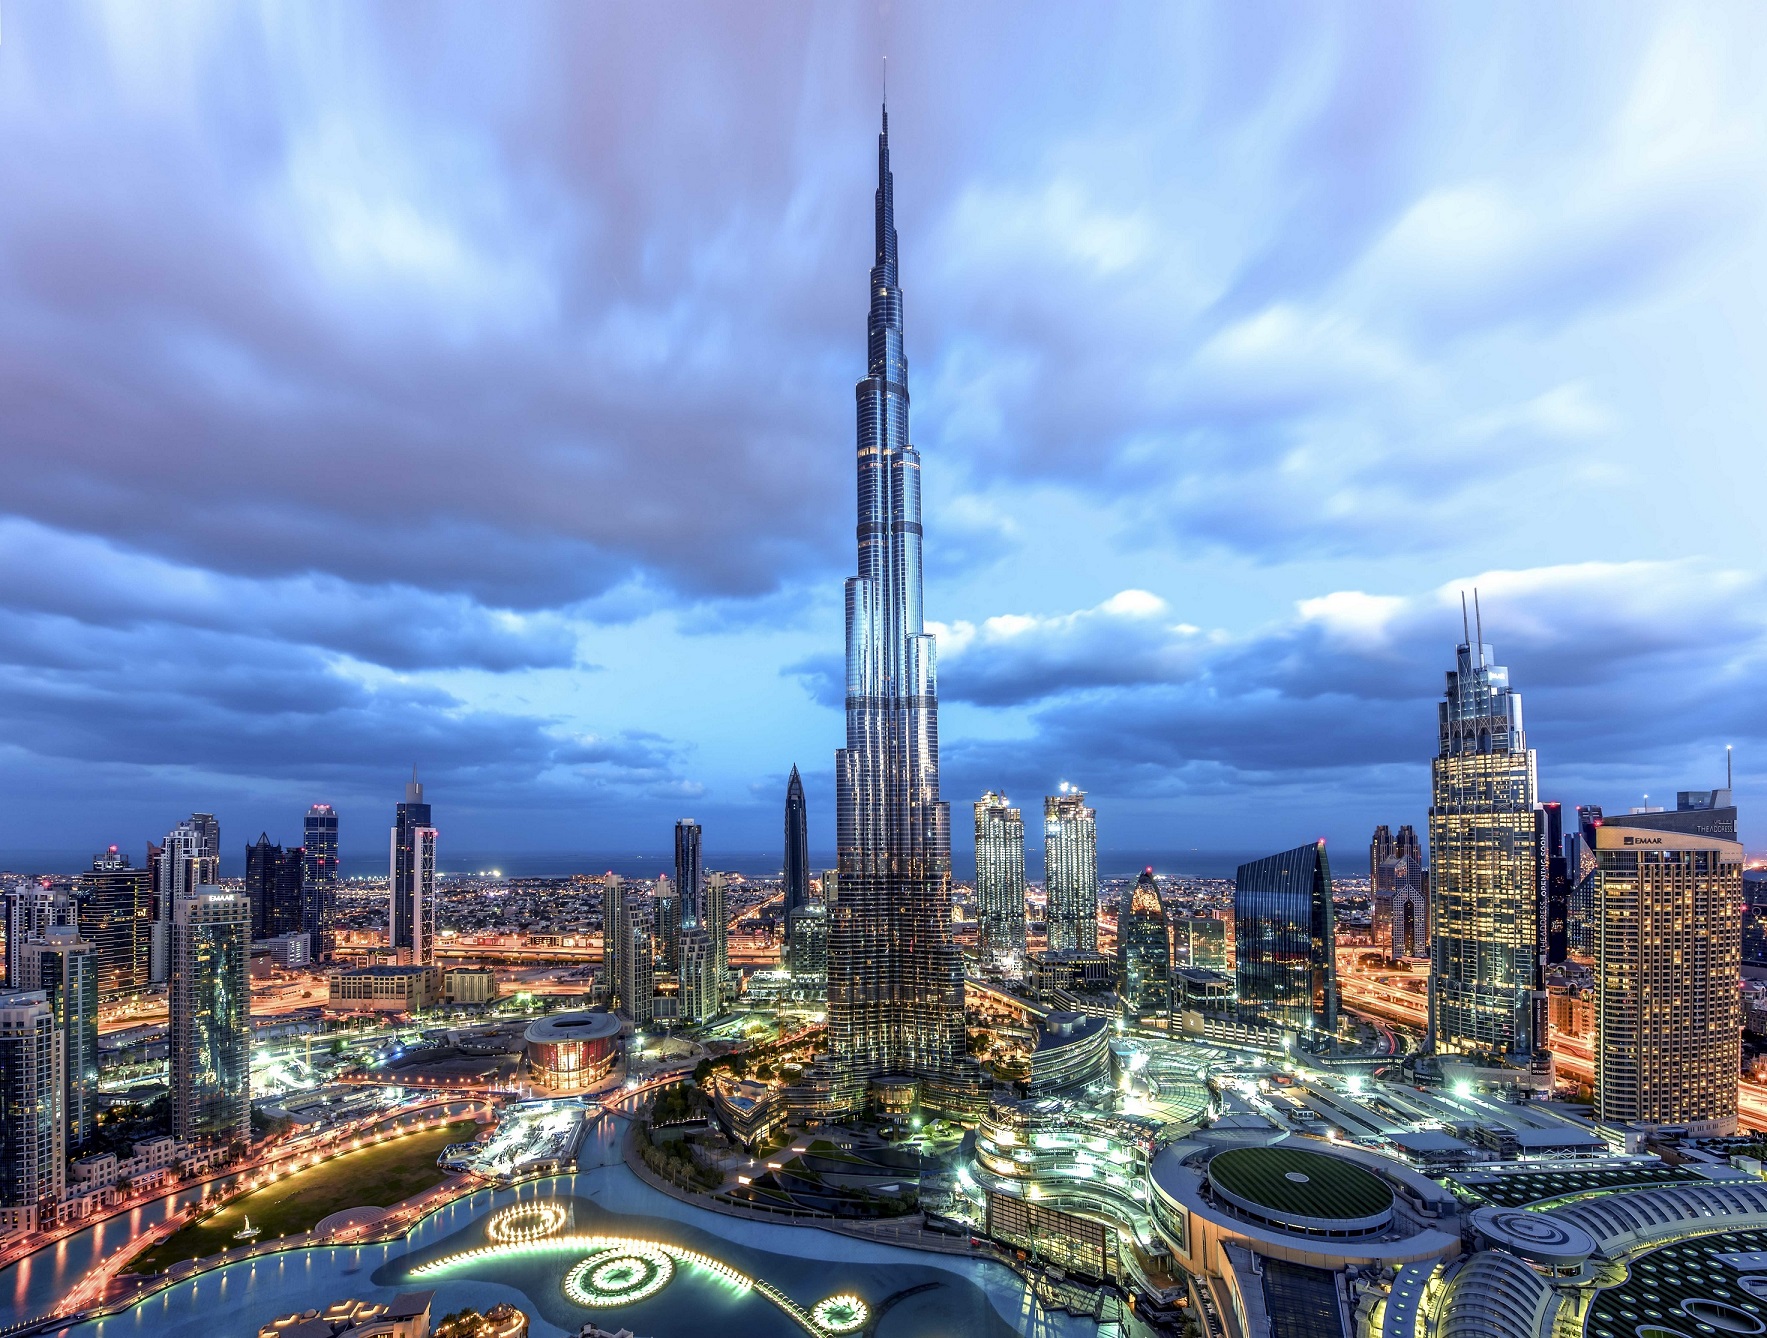 Burj Khalifa the world's tallest building